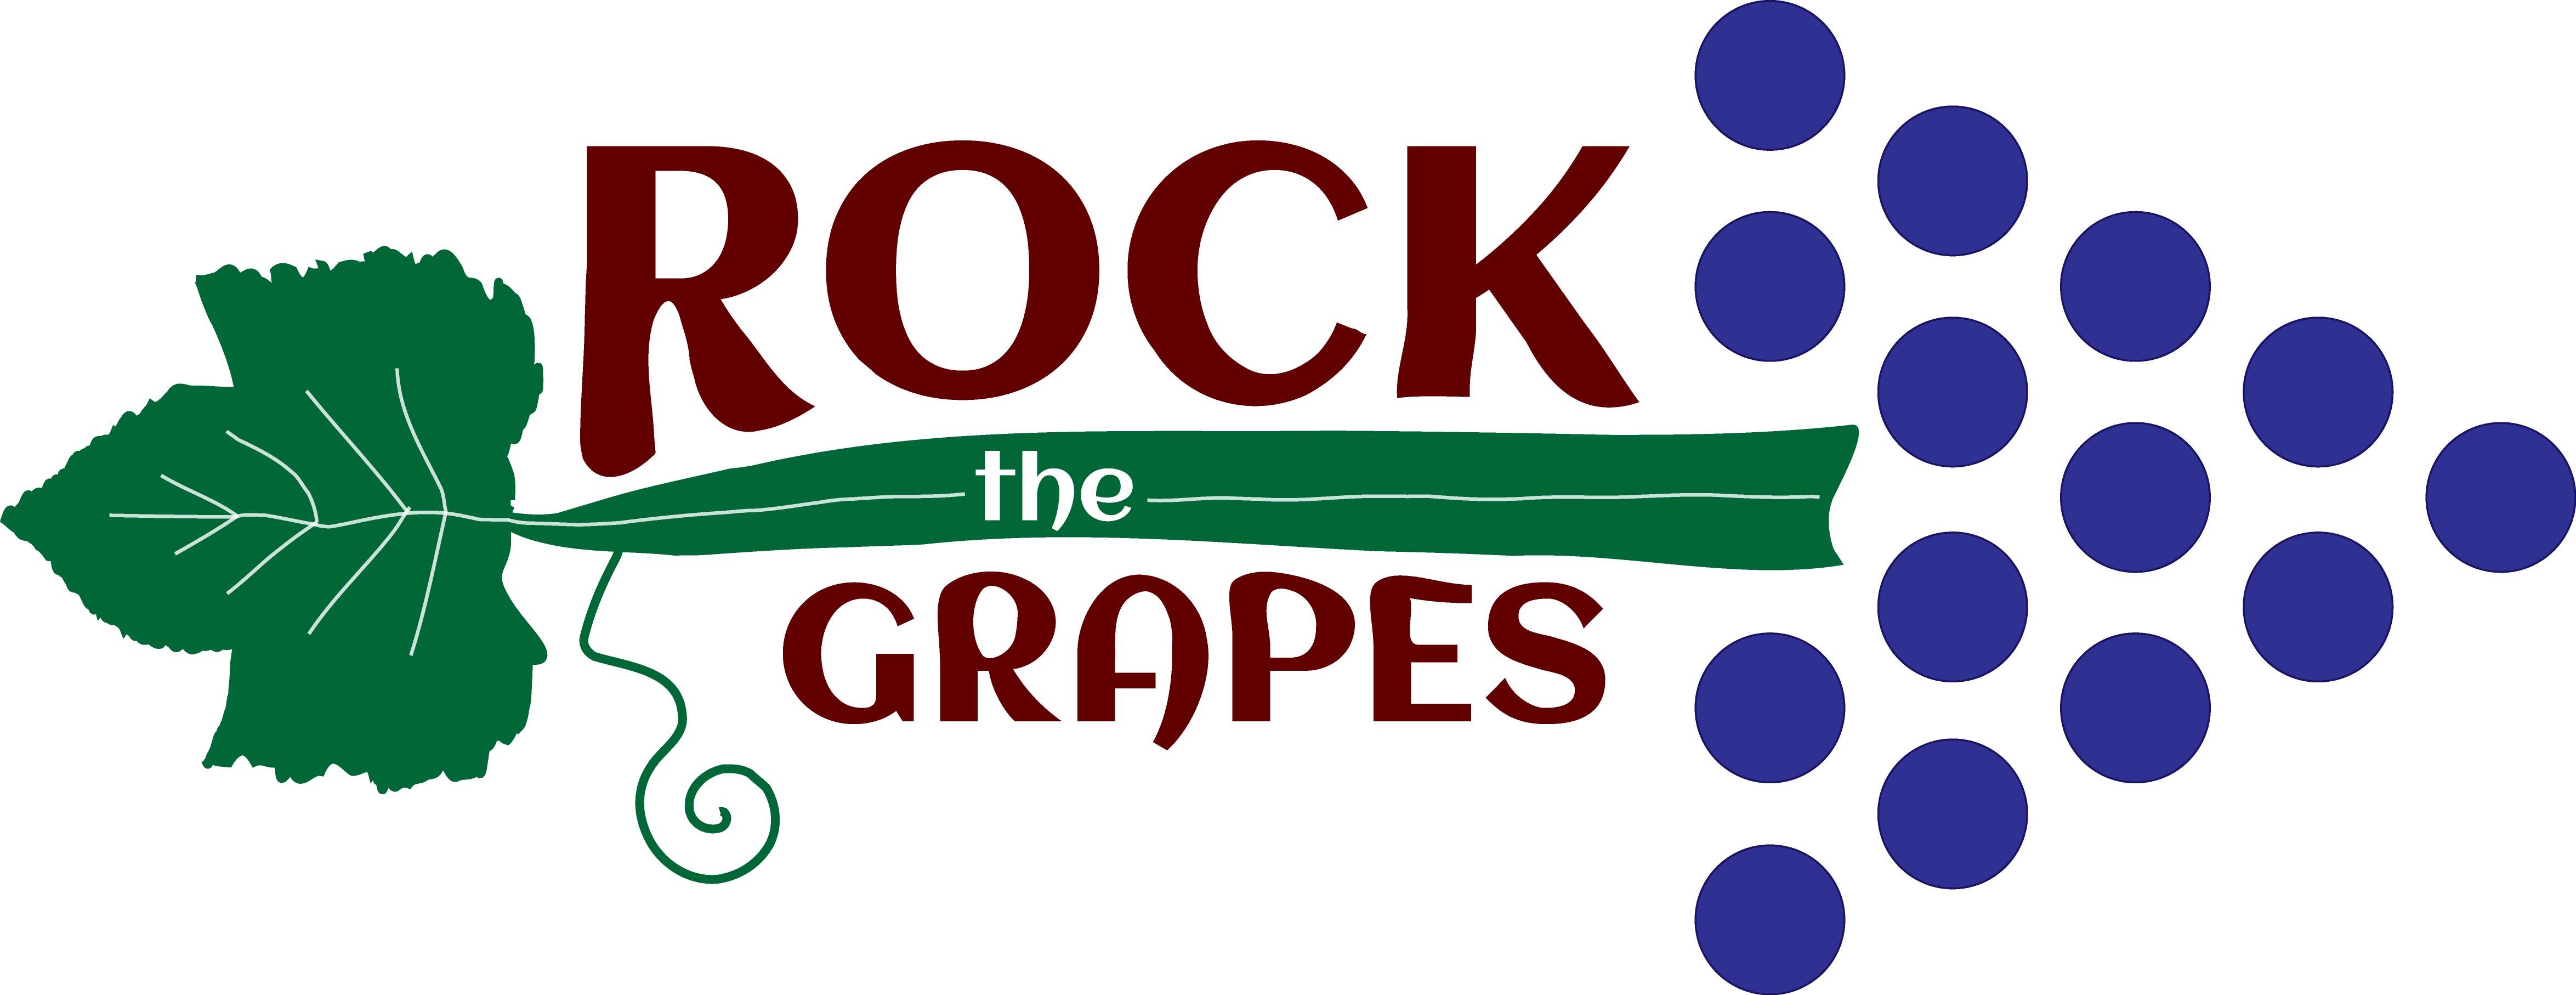 grapes clipart grape stomping